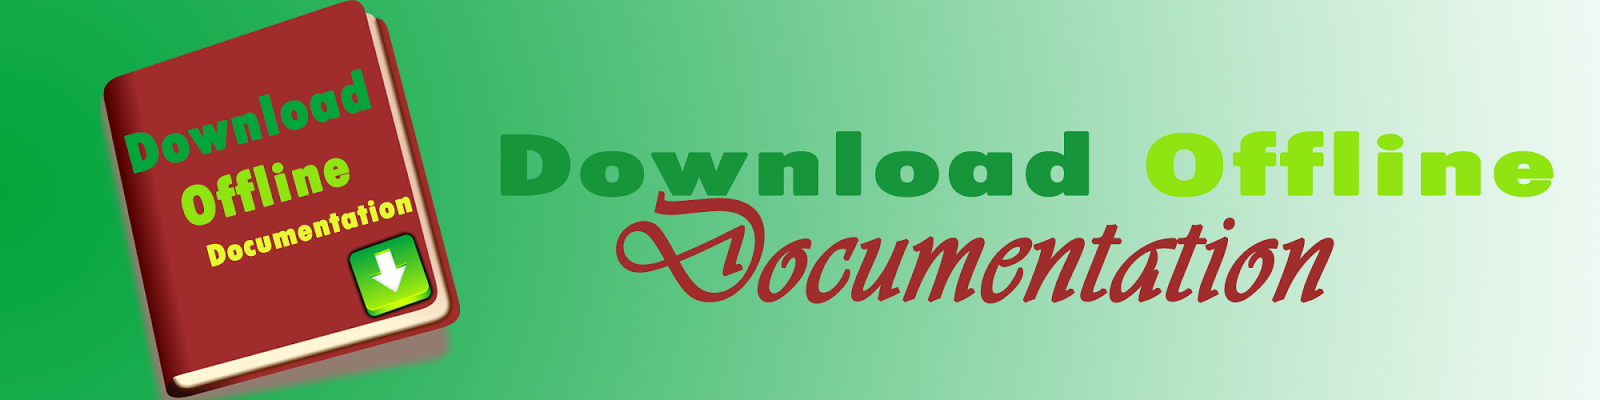 Download Offline Documentation